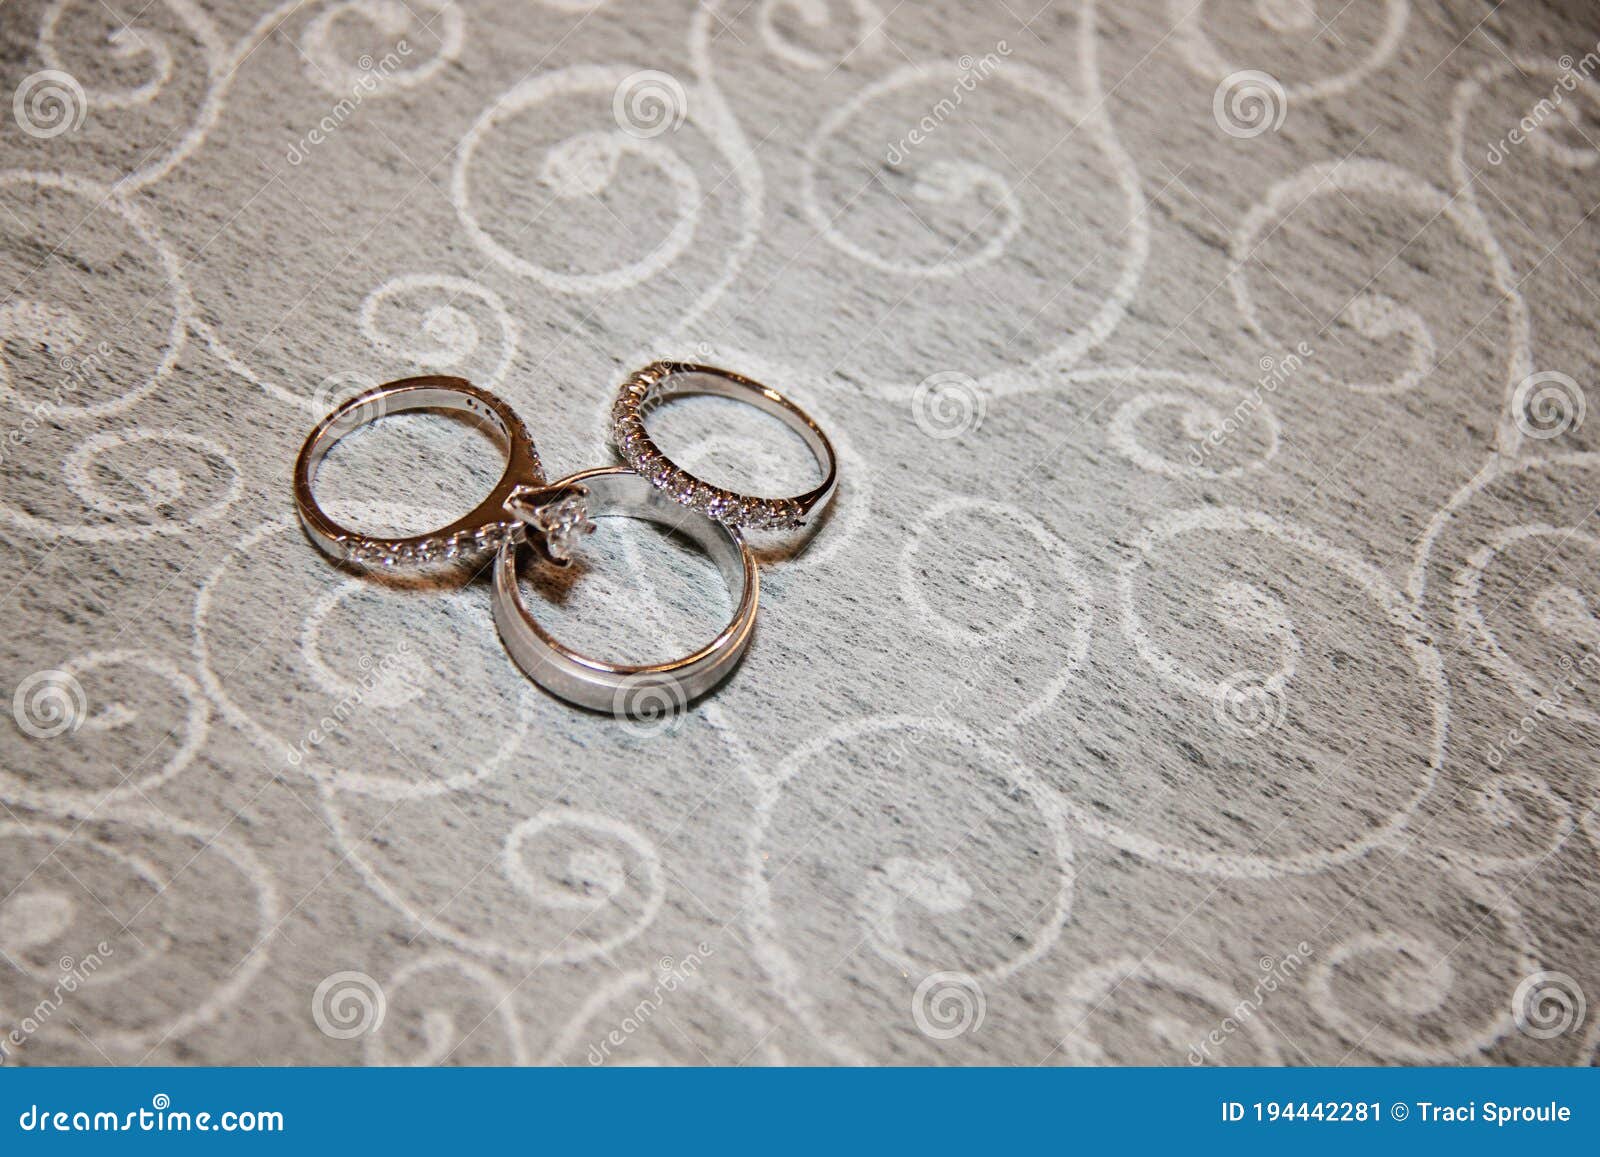 wedding bands engagement ring arranged as hidden mickey